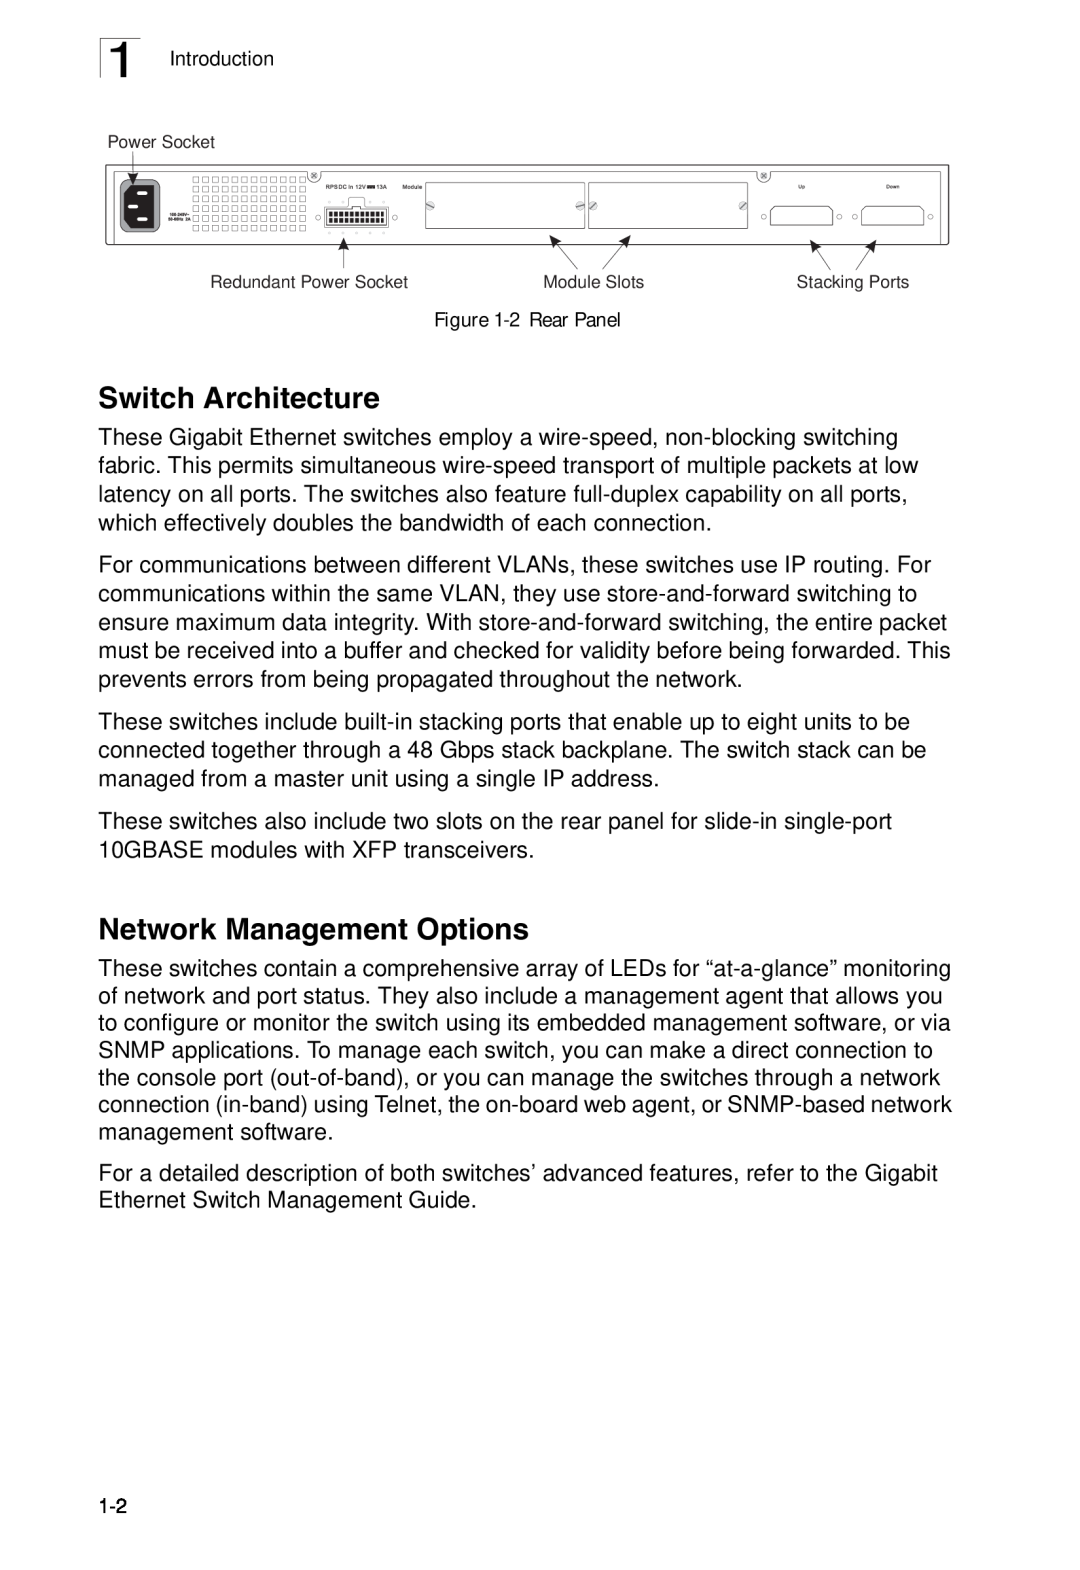 SMC Networks SMC8926EM, SMC8950EM manual Switch Architecture, Network Management Options, 2 Rear Panel 